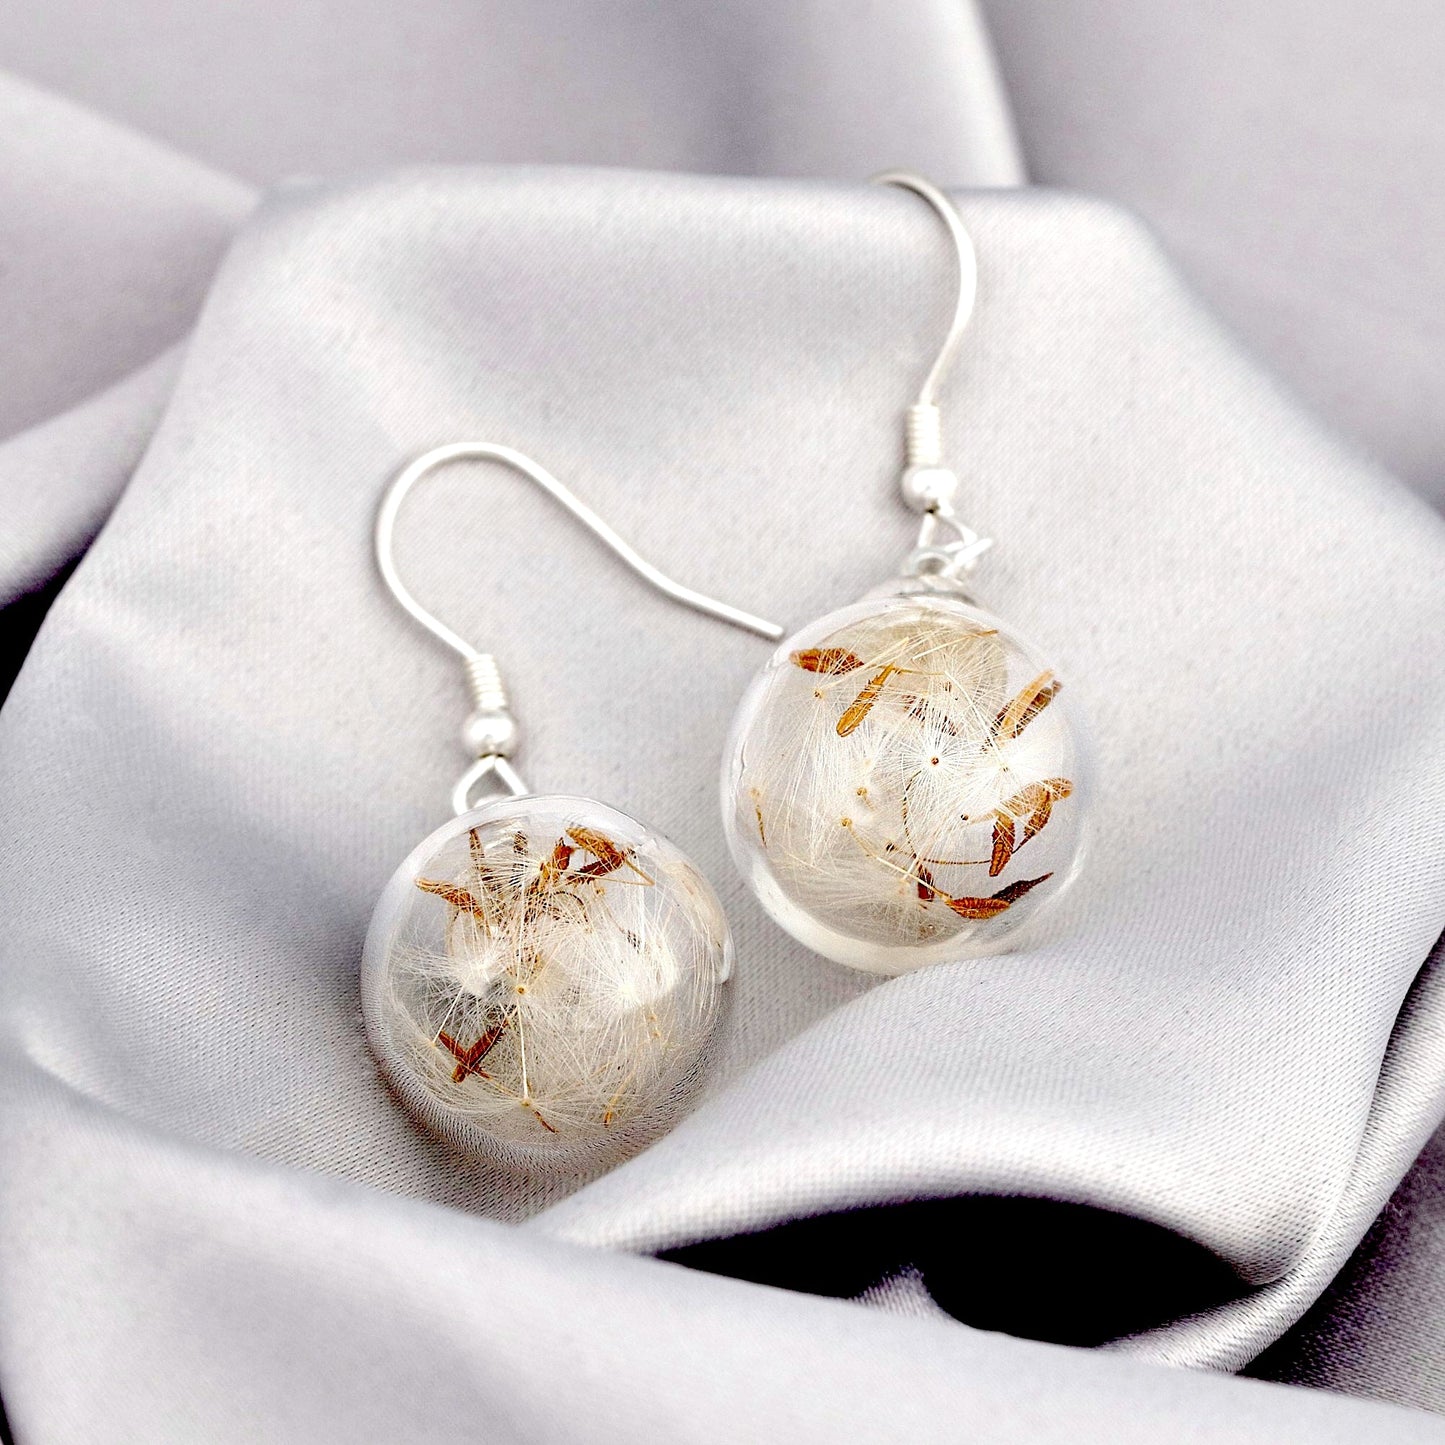 Romantic Real Pulp Flowers Earrings - 925 Sterling Silver - Floral Elegant Jewelry - Ear925-12